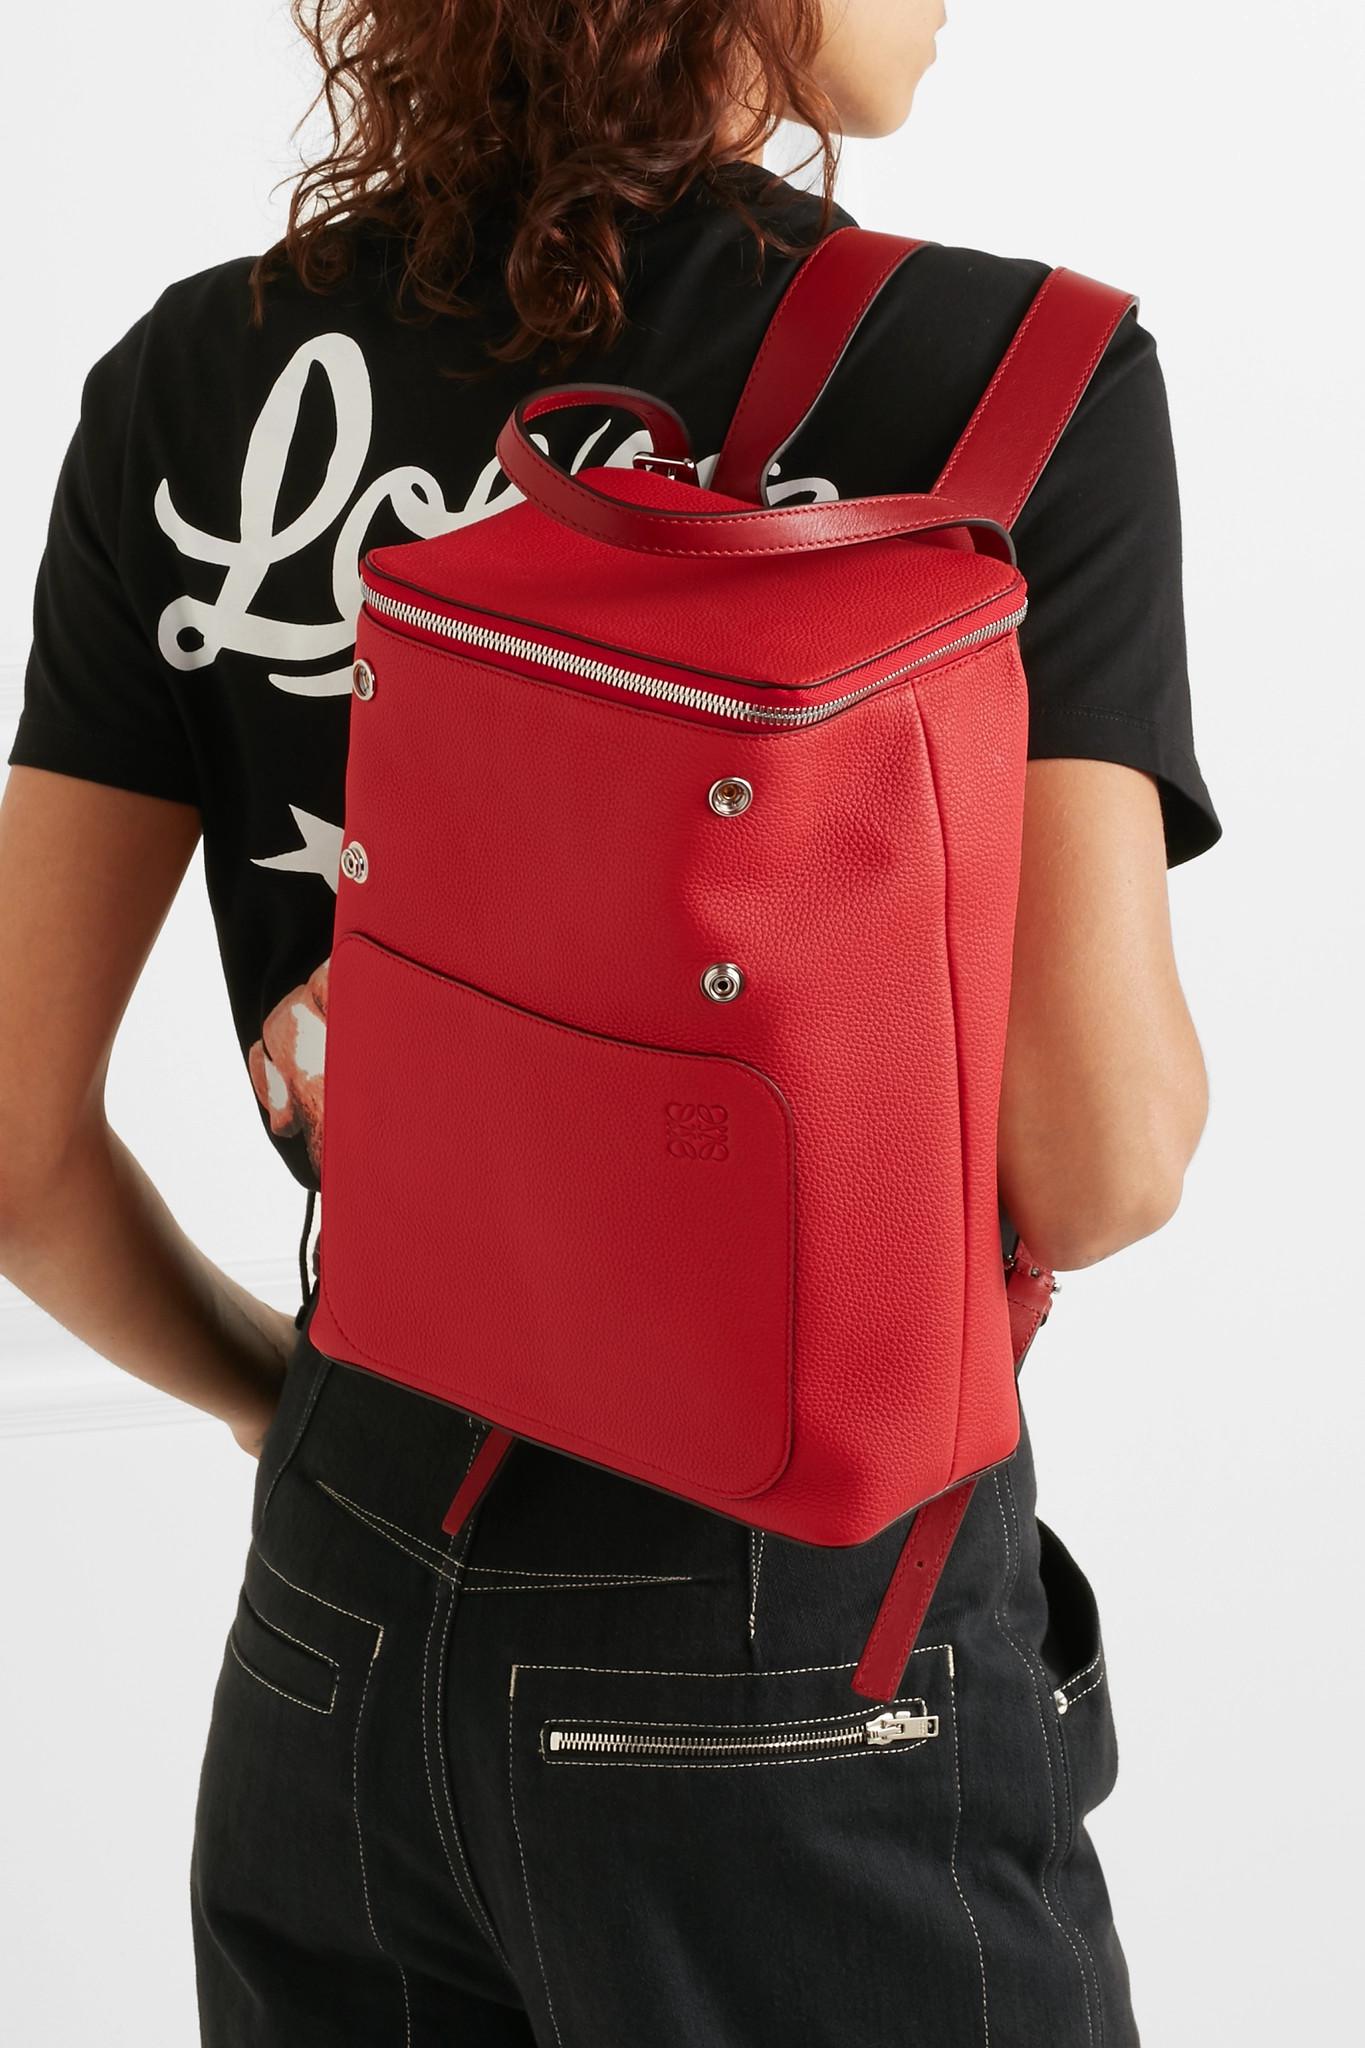 Loewe Goya Backpack Leather Small Red 186399135